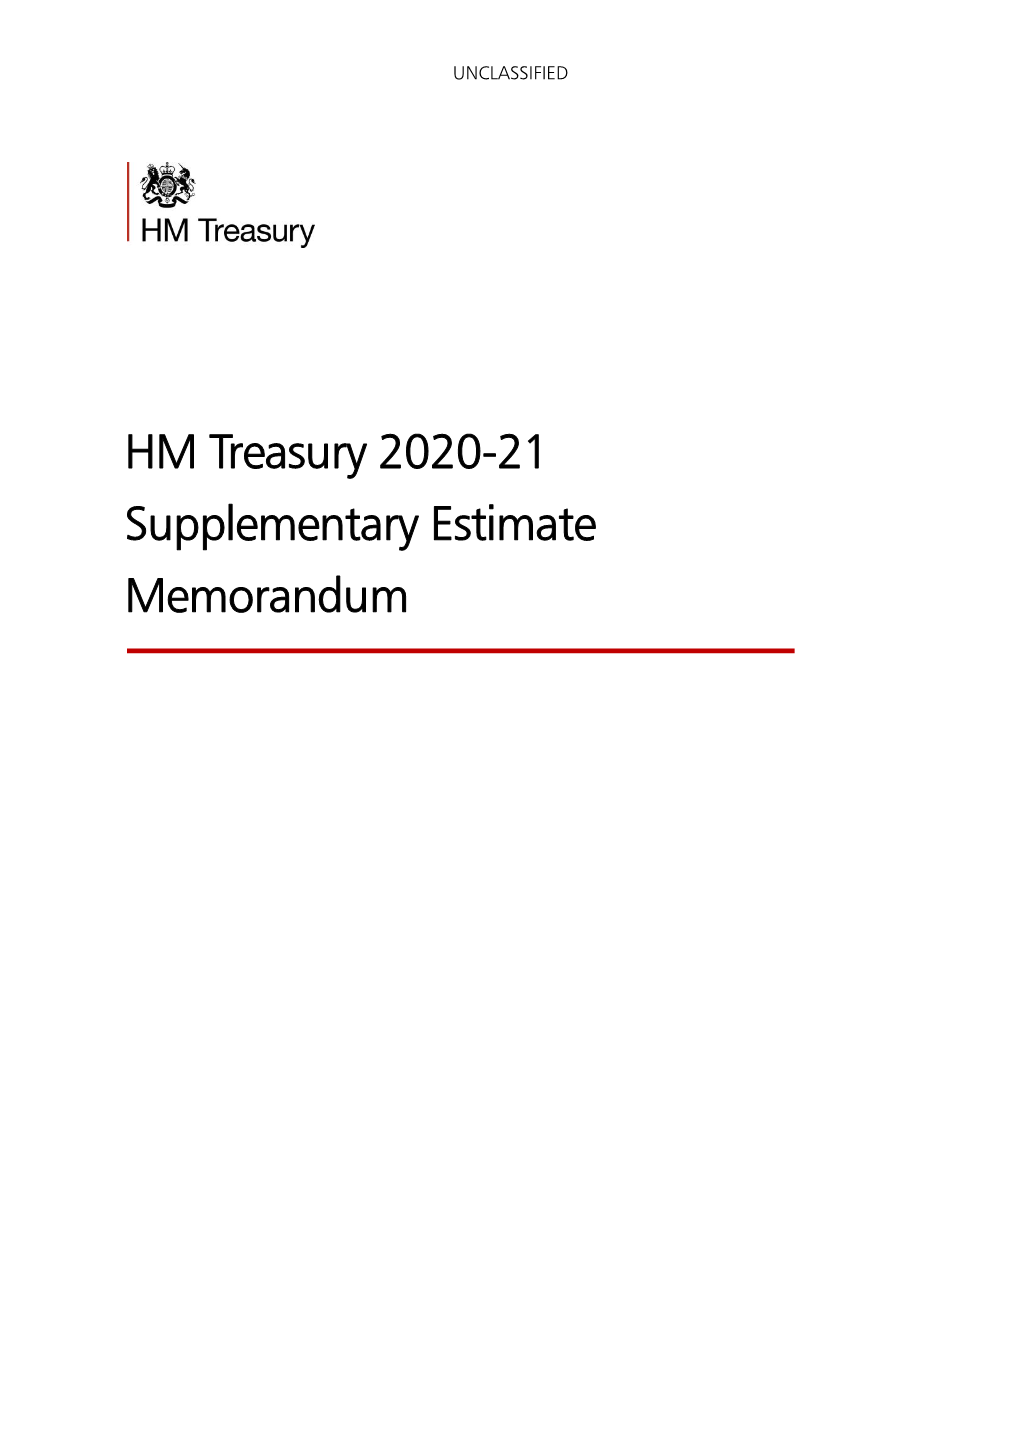 HM Treasury 2020-21 Supplementary Estimate Memorandum UNCLASSIFIED